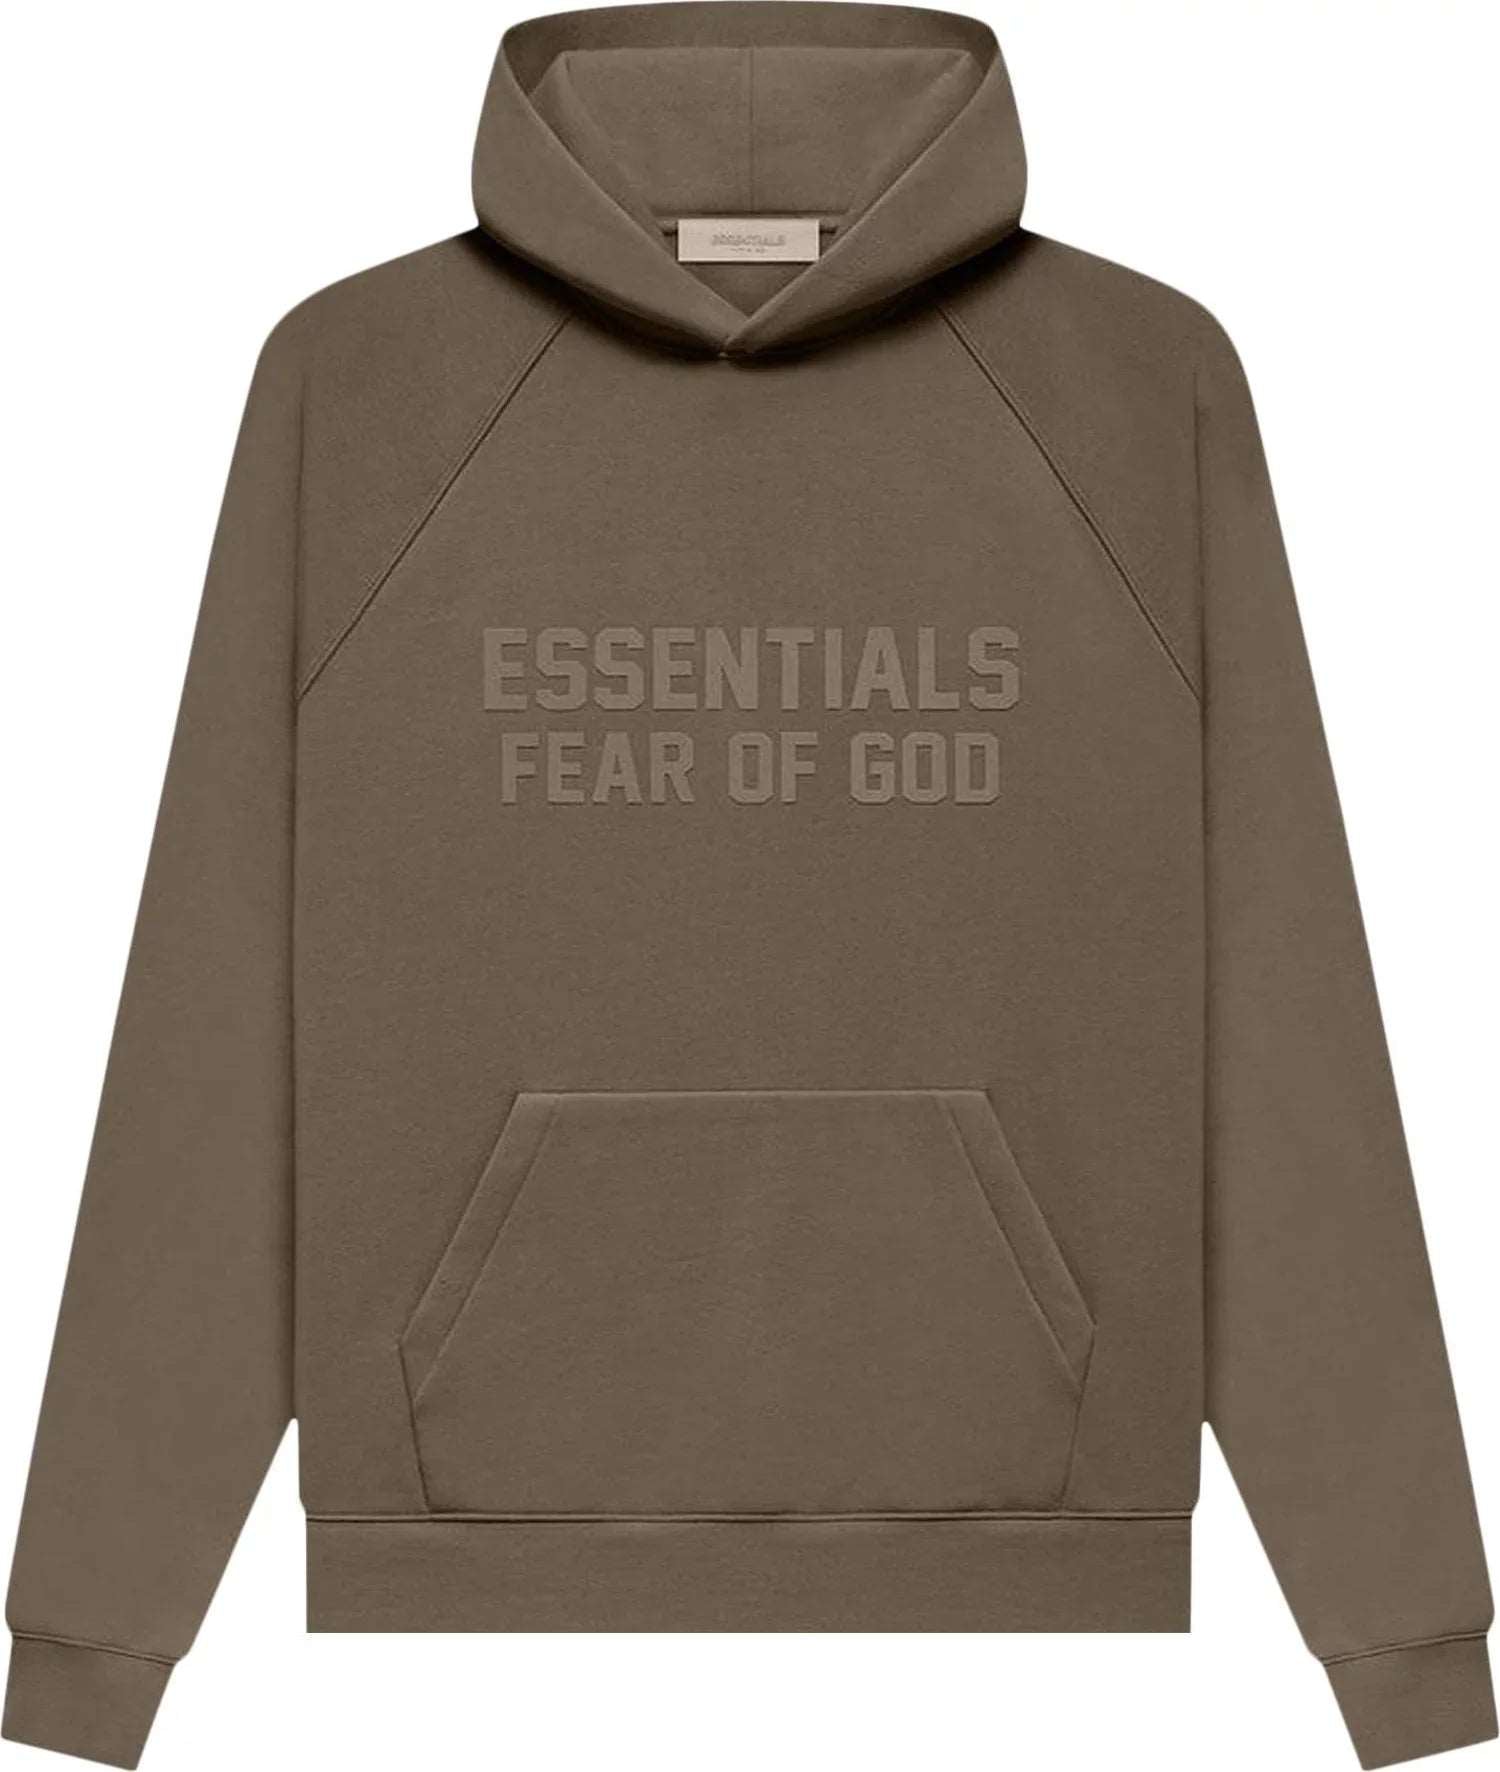 Fear of God Essentials Hoodie 'Wood' Clothing